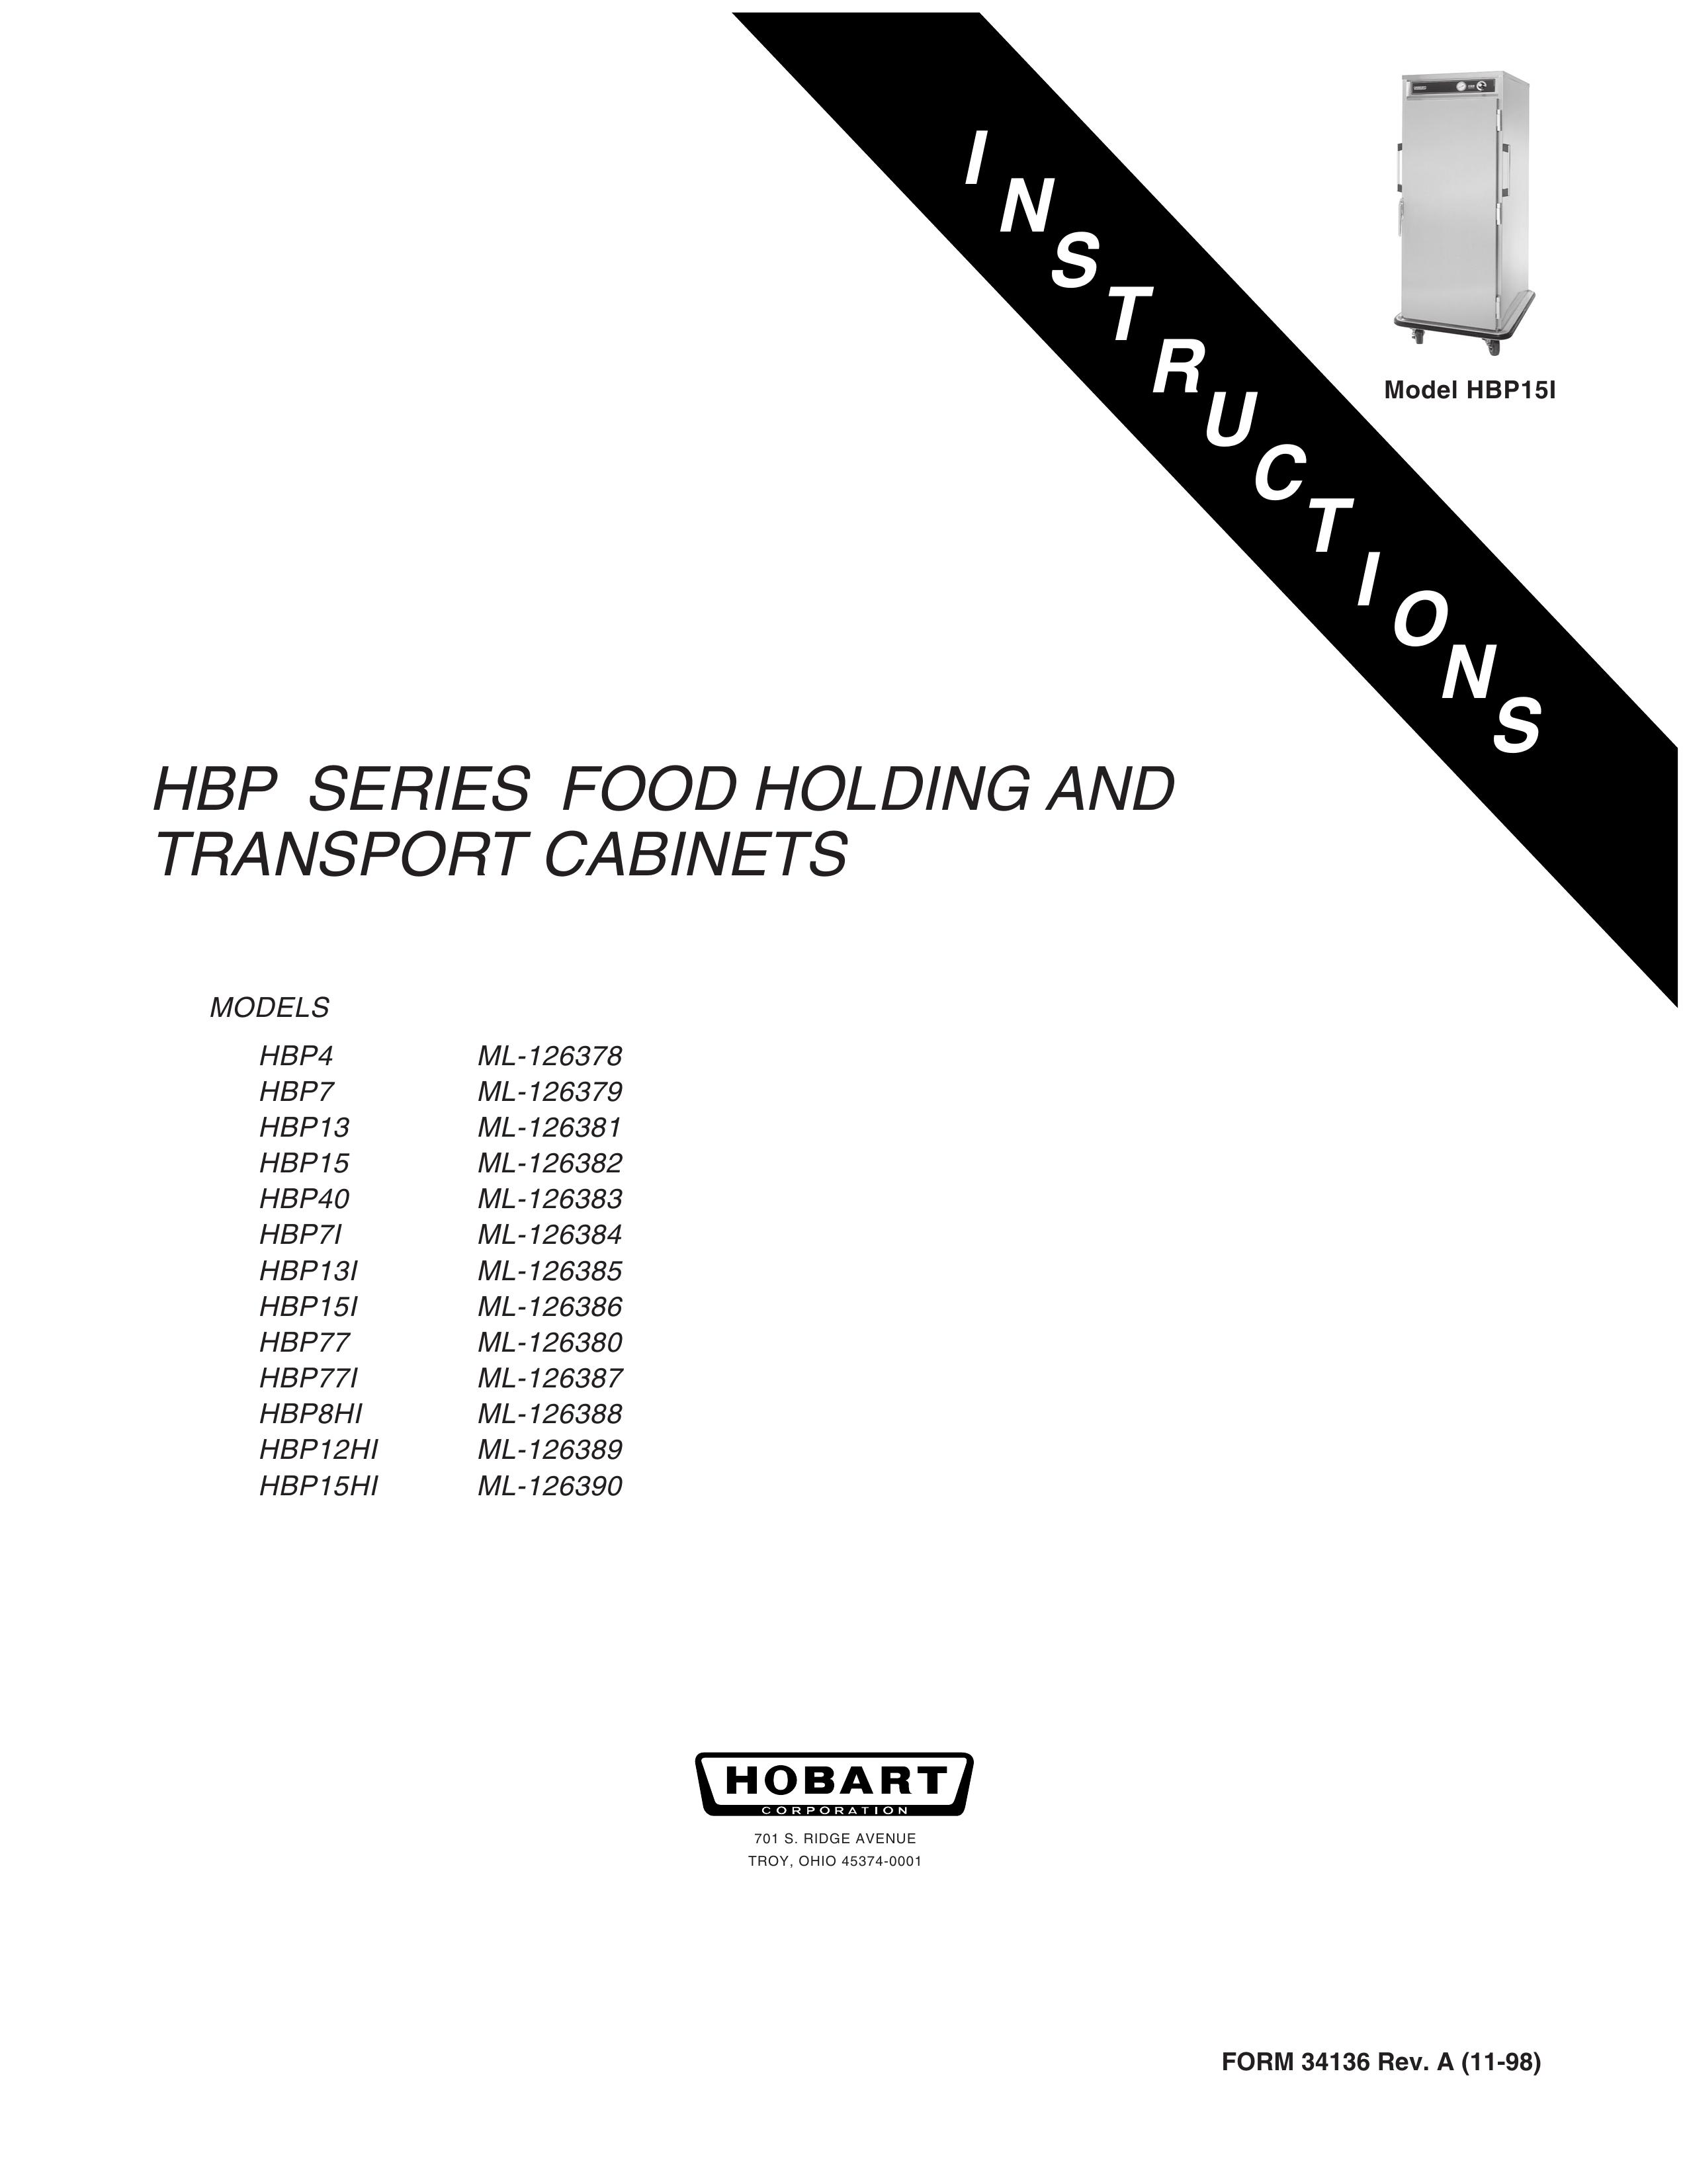 Hobart HBP15I ML-126386 Outdoor Storage User Manual